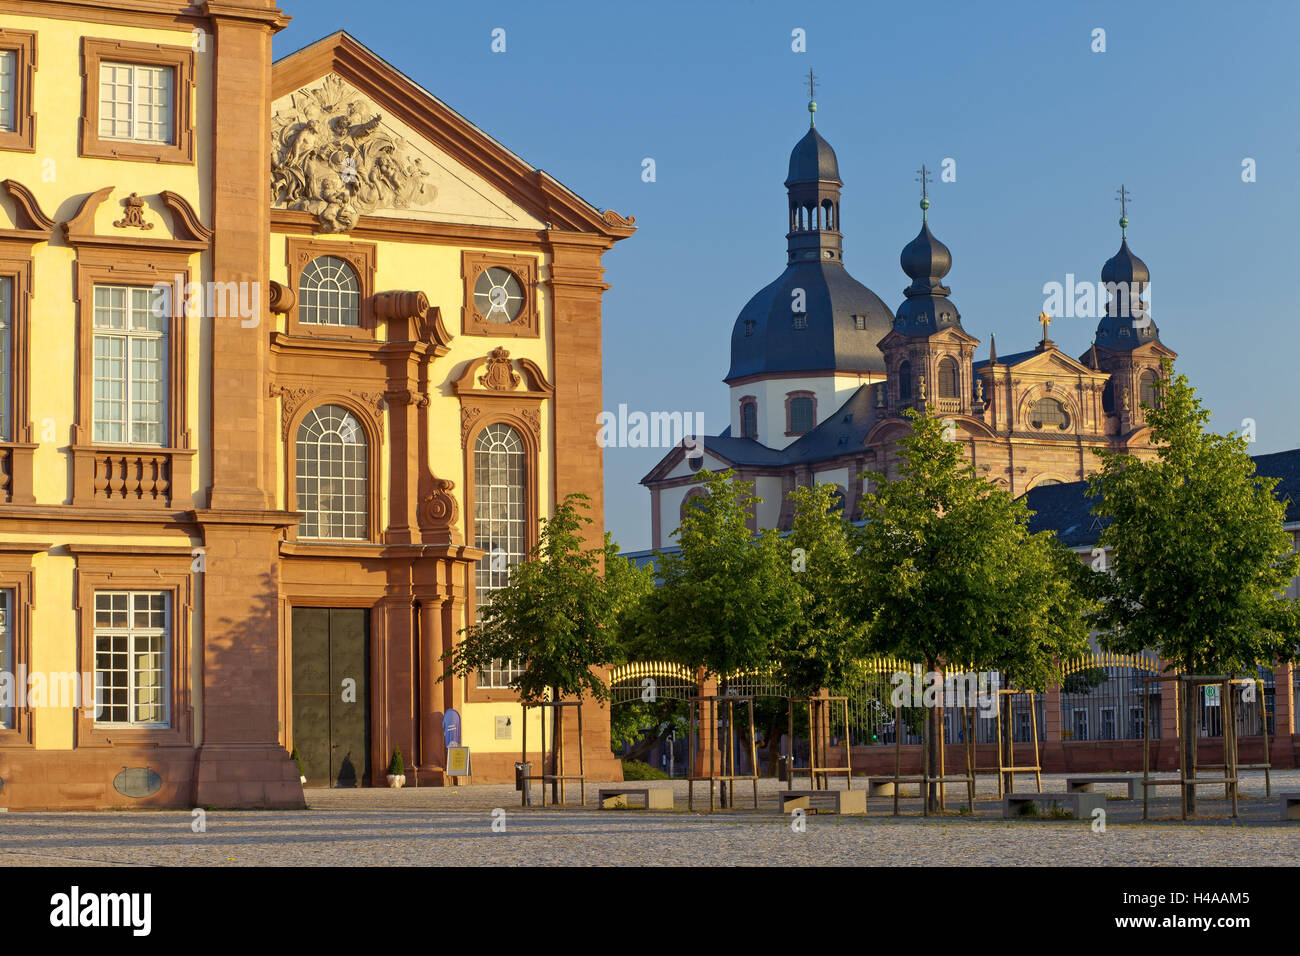 Germany, the Rhine, Baden-Württemberg, Mannheim, city centre, baroque castle, Catholic Jesuit's church Mannheim, Stock Photo